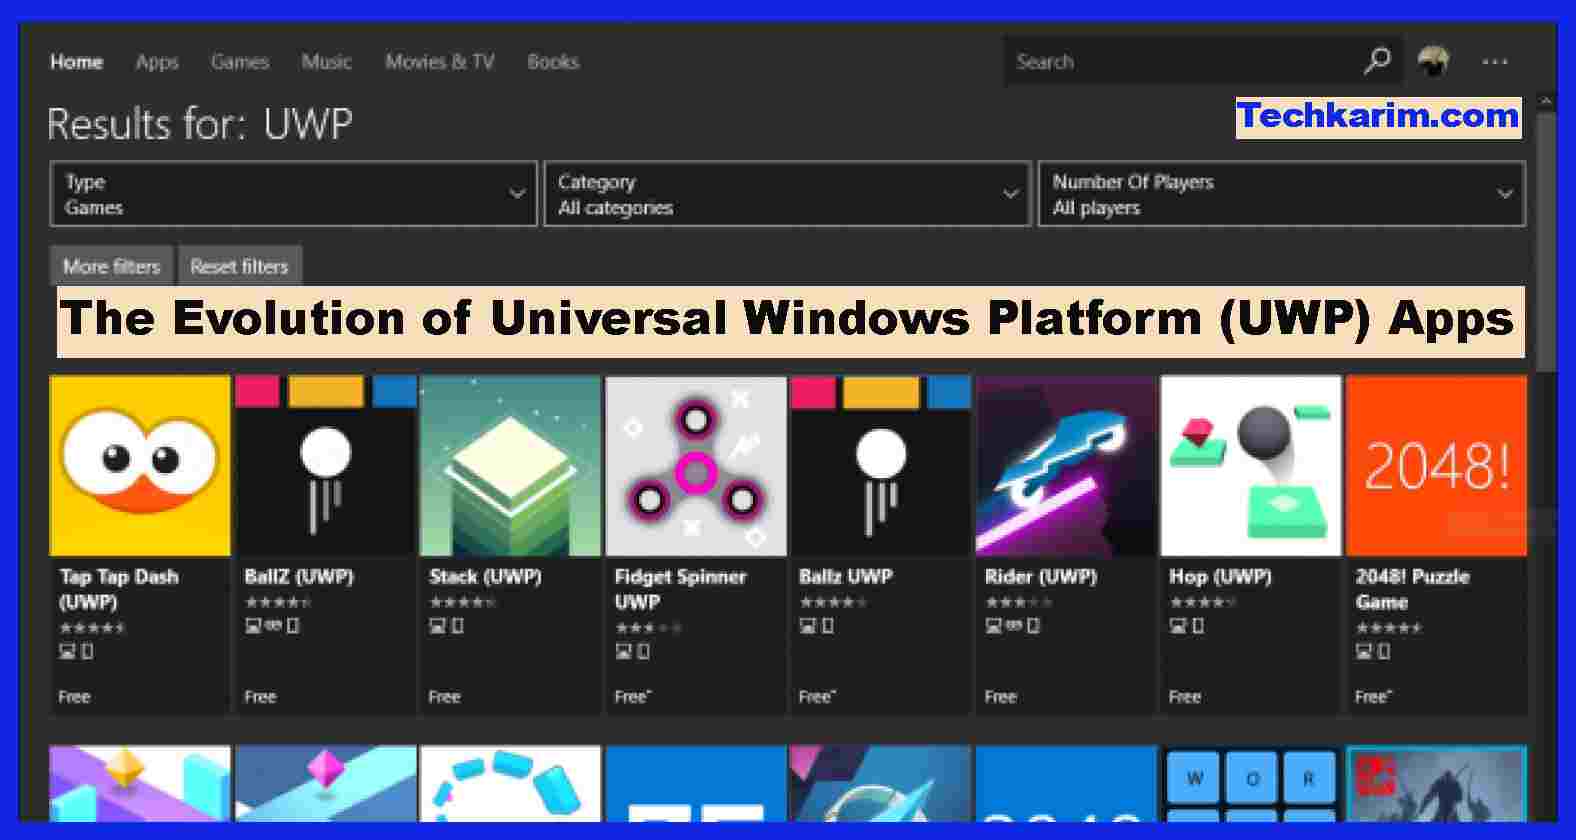 The Evolution of Universal Windows Platform (UWP) Apps